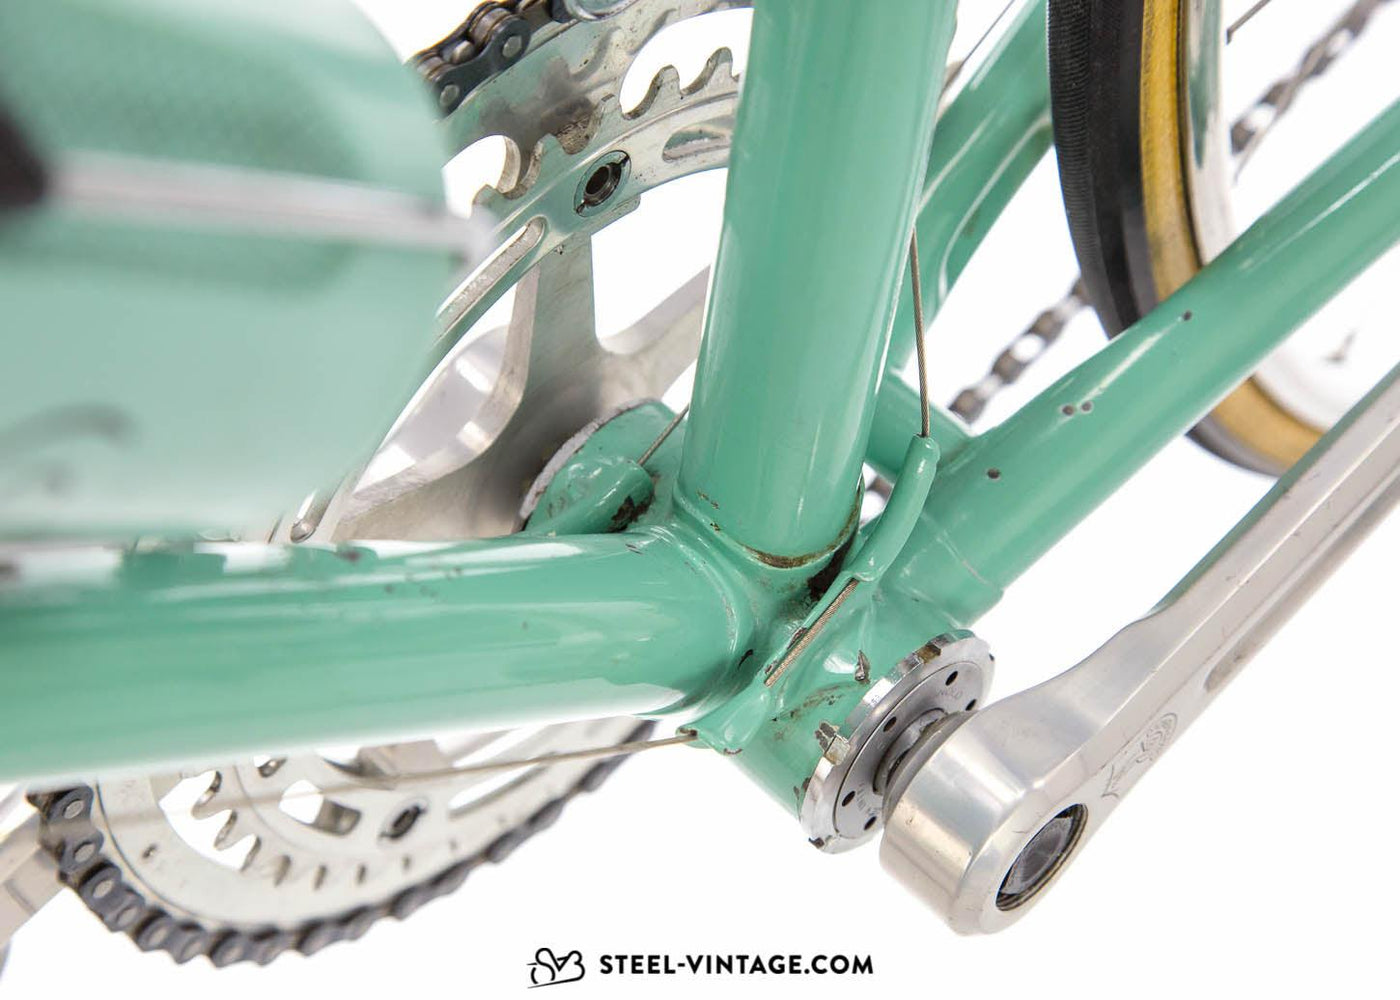 Bianchi Specialissima Professionale Road Bike 1974 - Steel Vintage Bikes